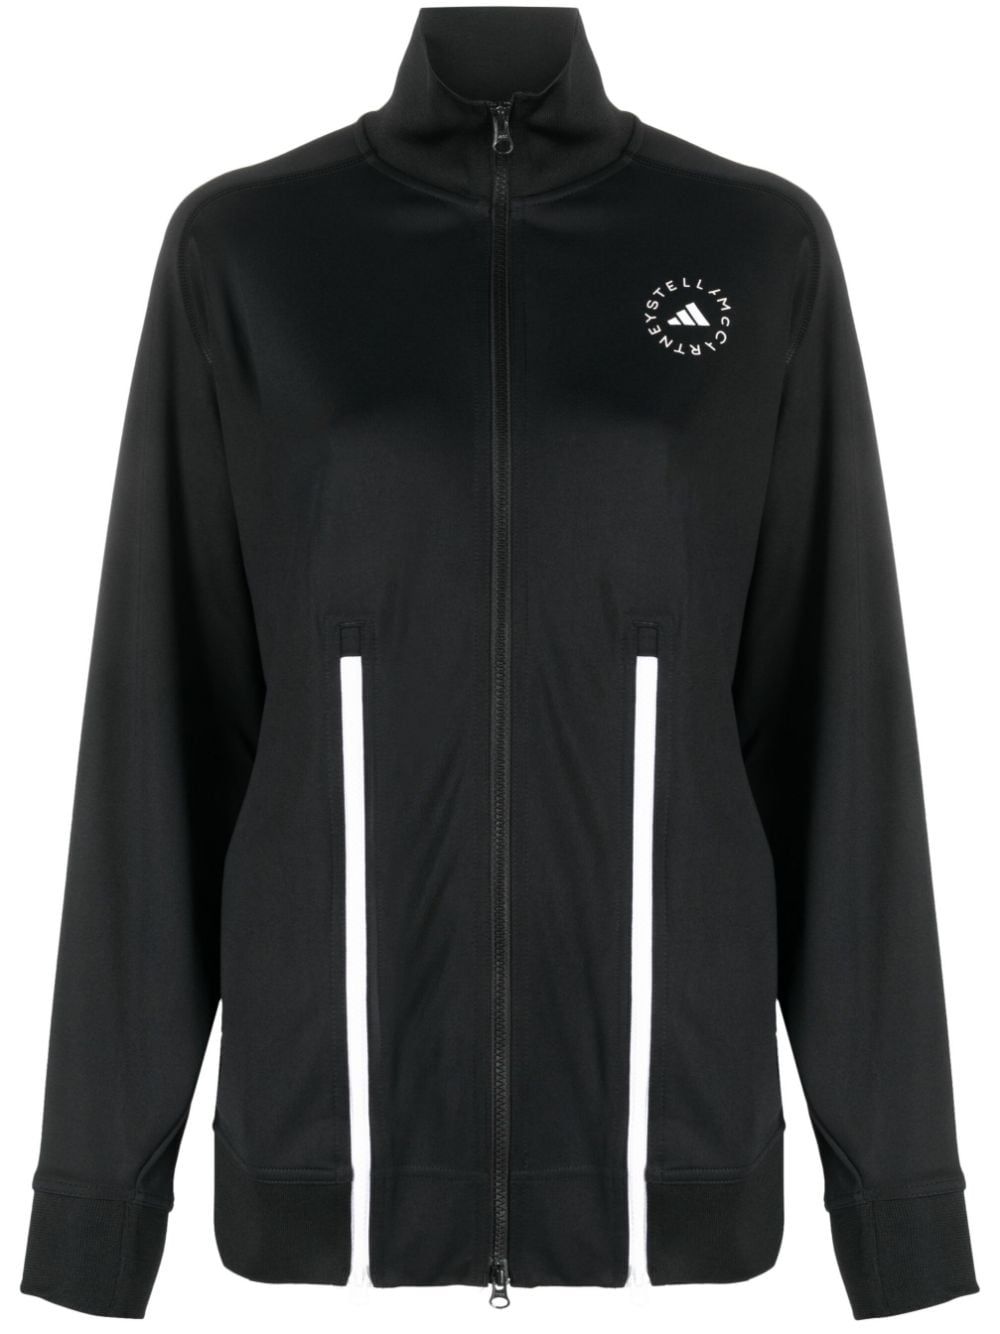 adidas by stella mccartney veste zippée truecasuals à logo imprimé - noir